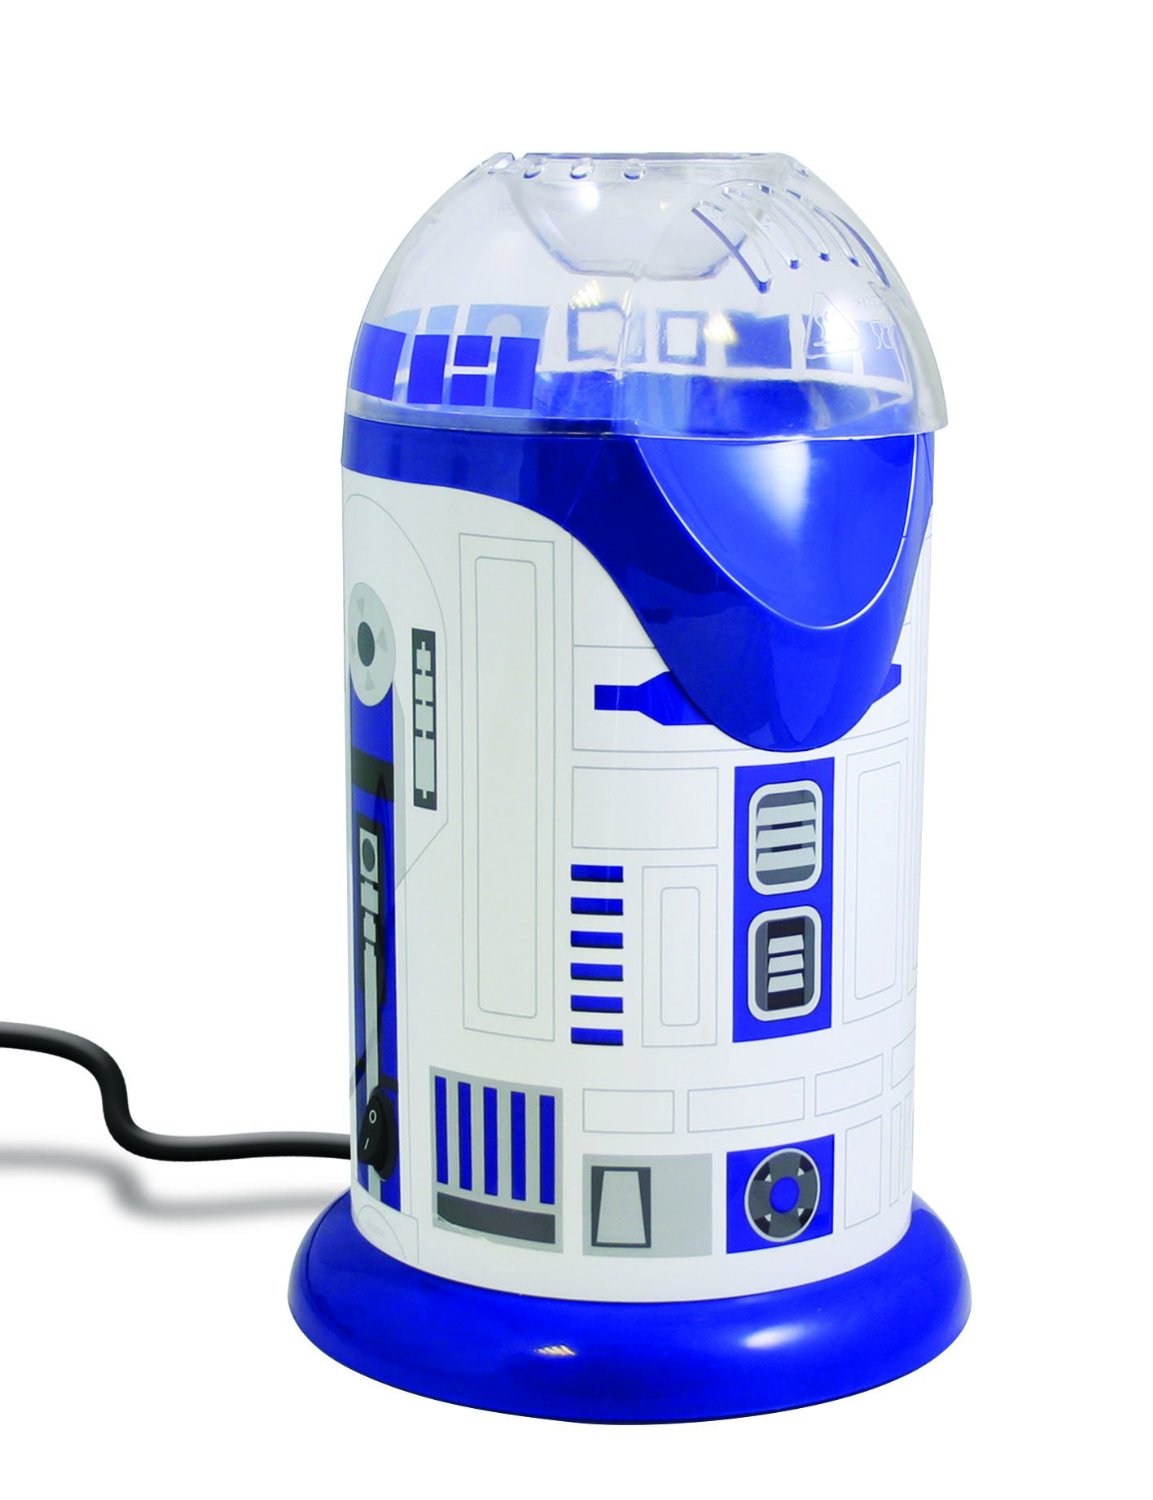 Pop it Like it’s Galactic with the Star Wars R2-D2 Popcorn Popper